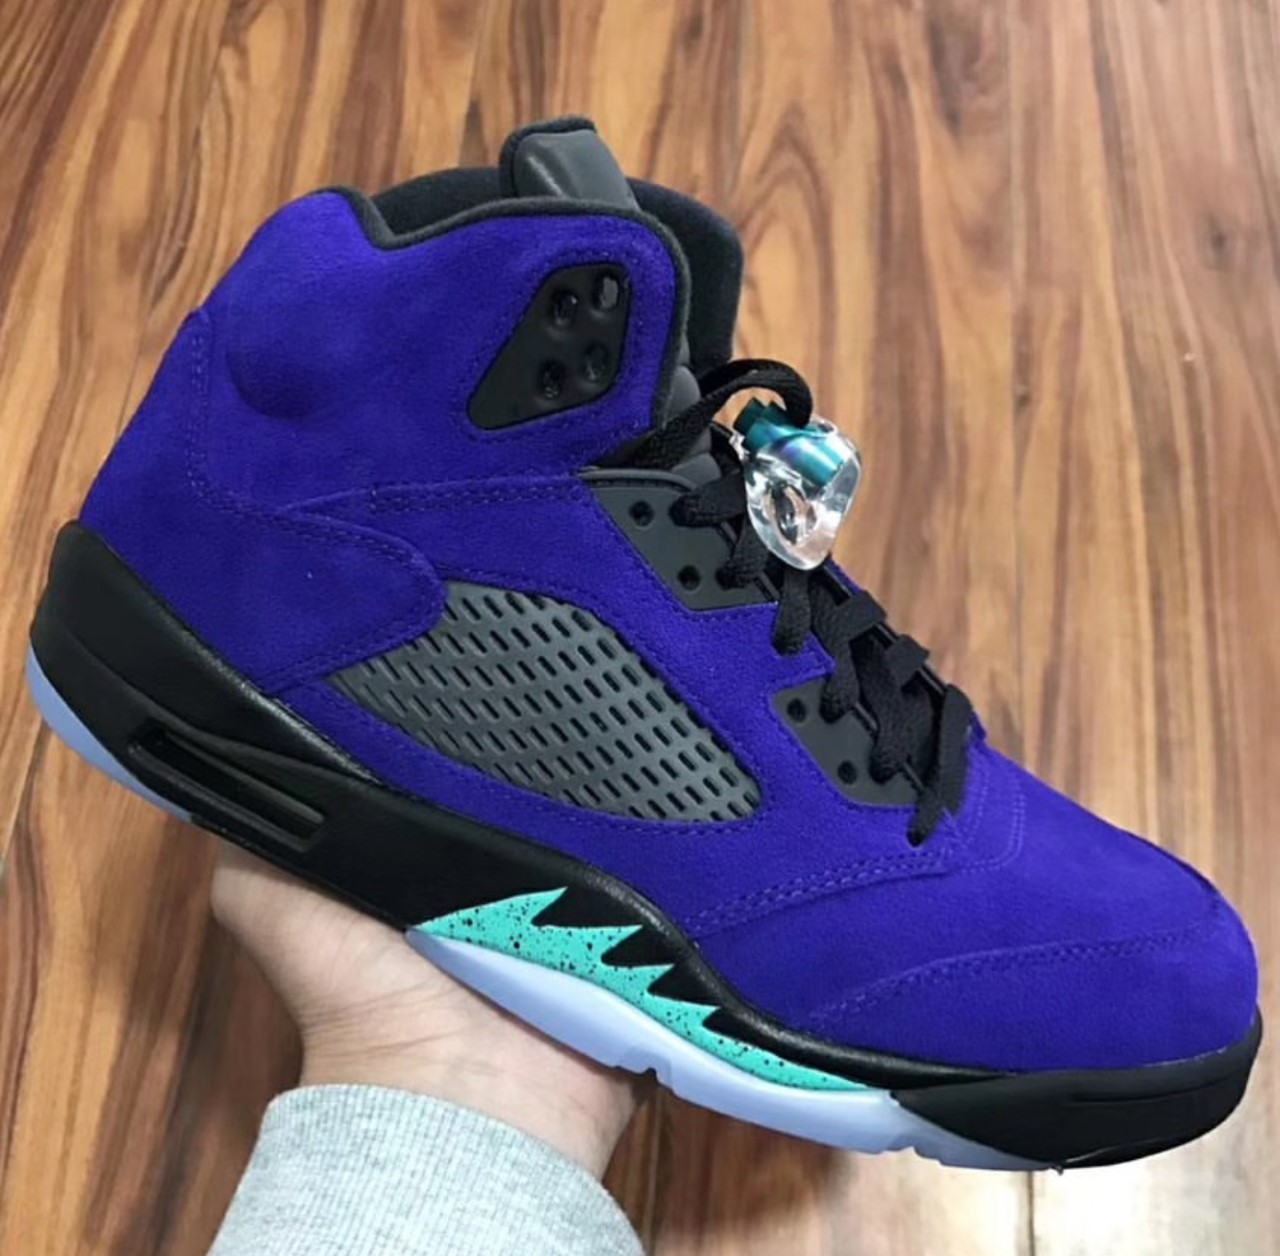 First Look At The Air Jordan 5 Retro "Alternate Grape" | Sneaker Buzz